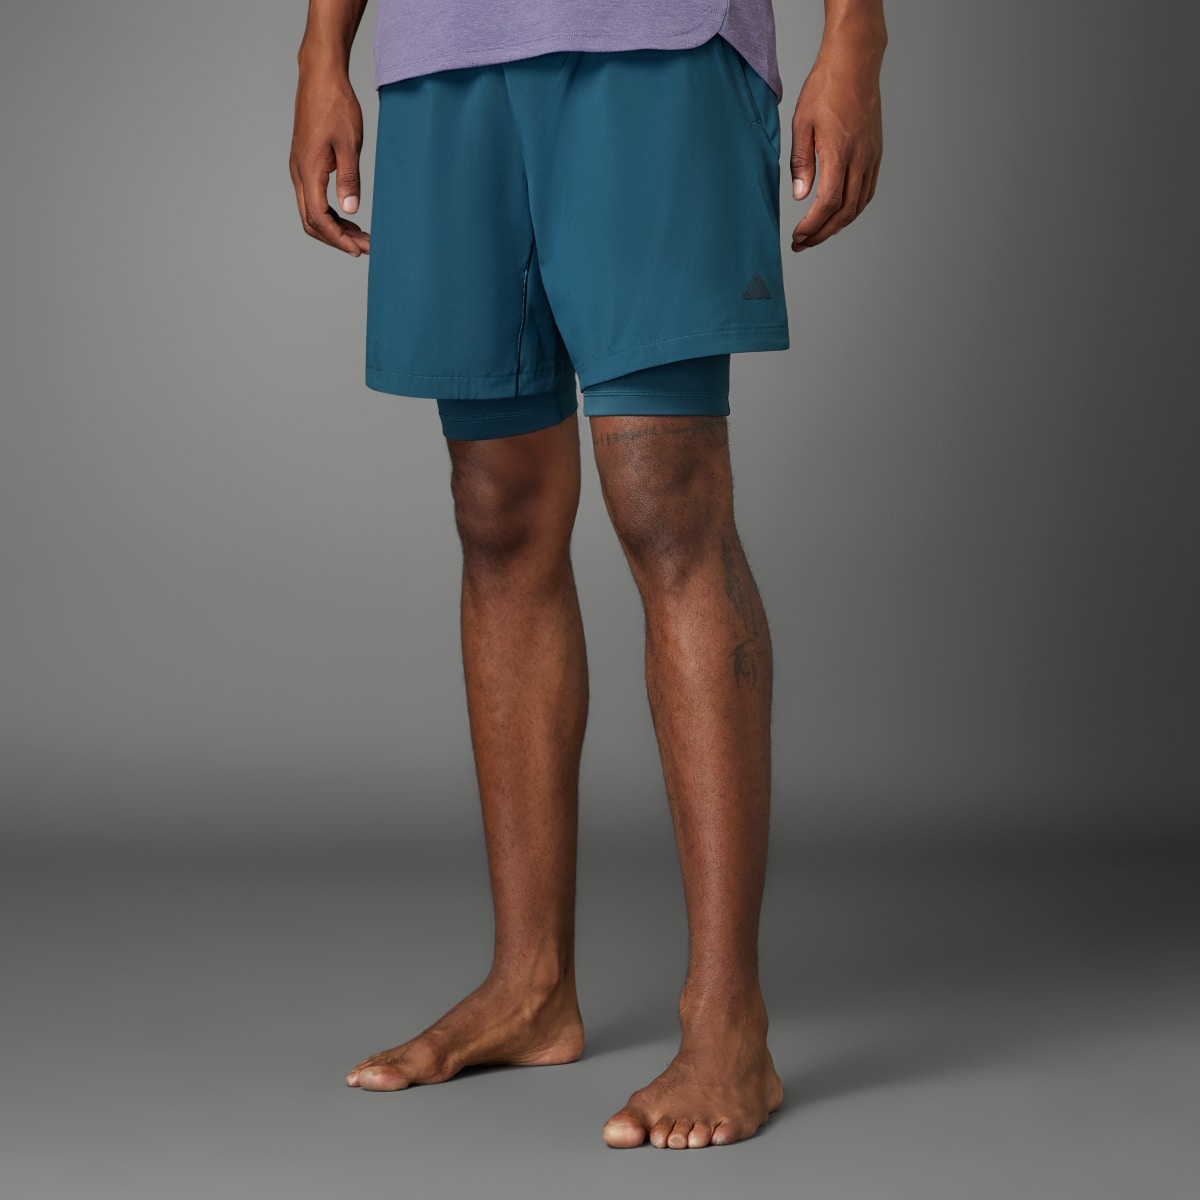 Adidas Yoga Premium Training Two-in-One Shorts. 9